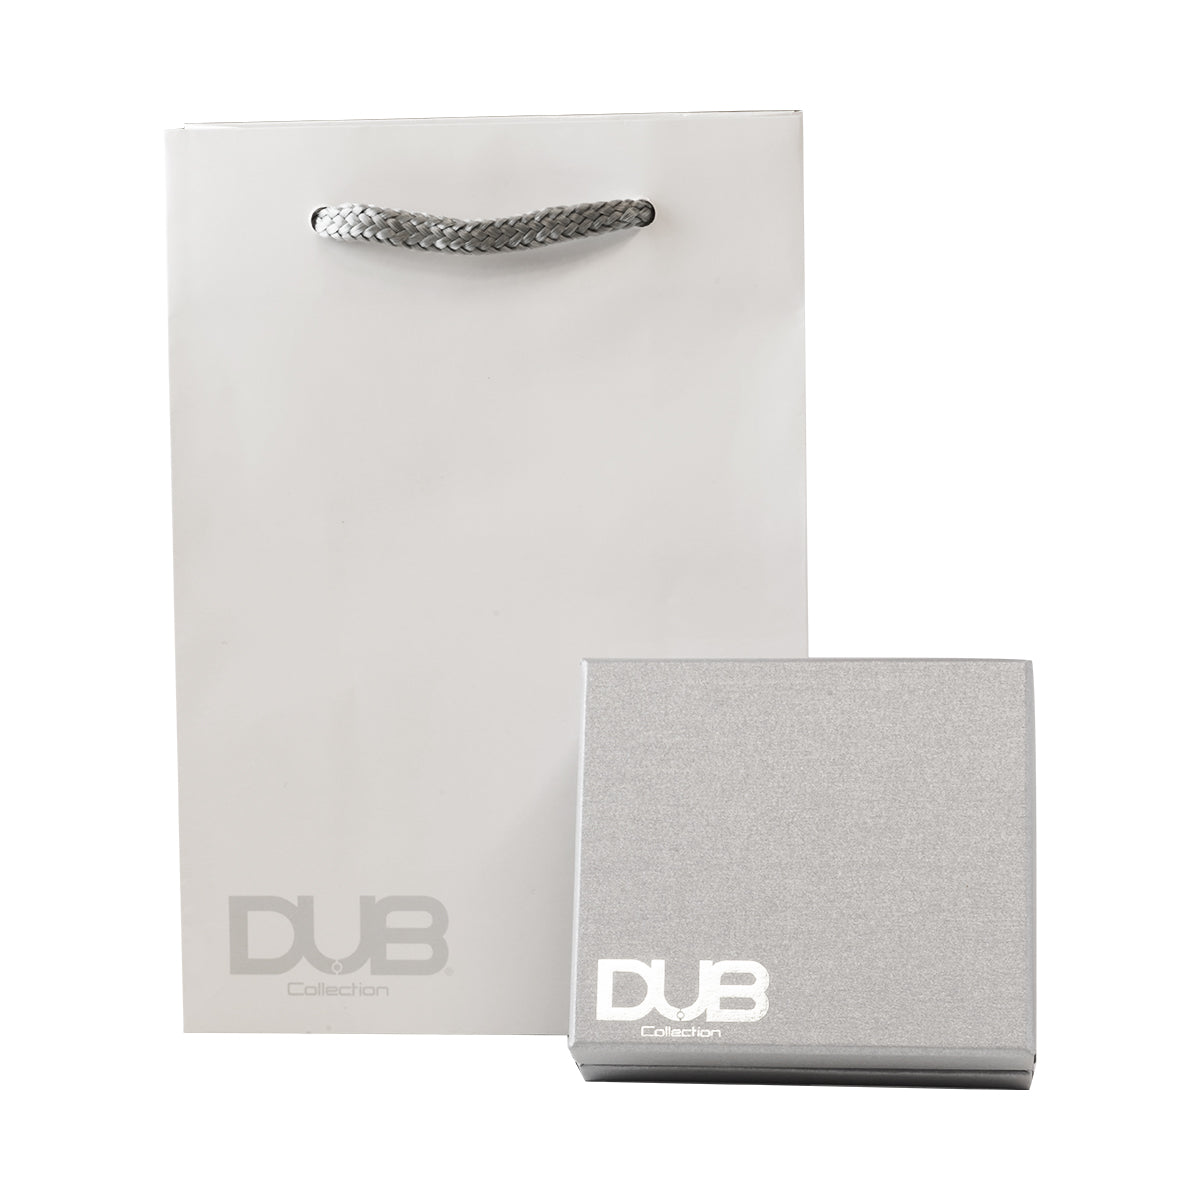 DUBj-205-1 Side emblem stone“Rectangle” Necklace